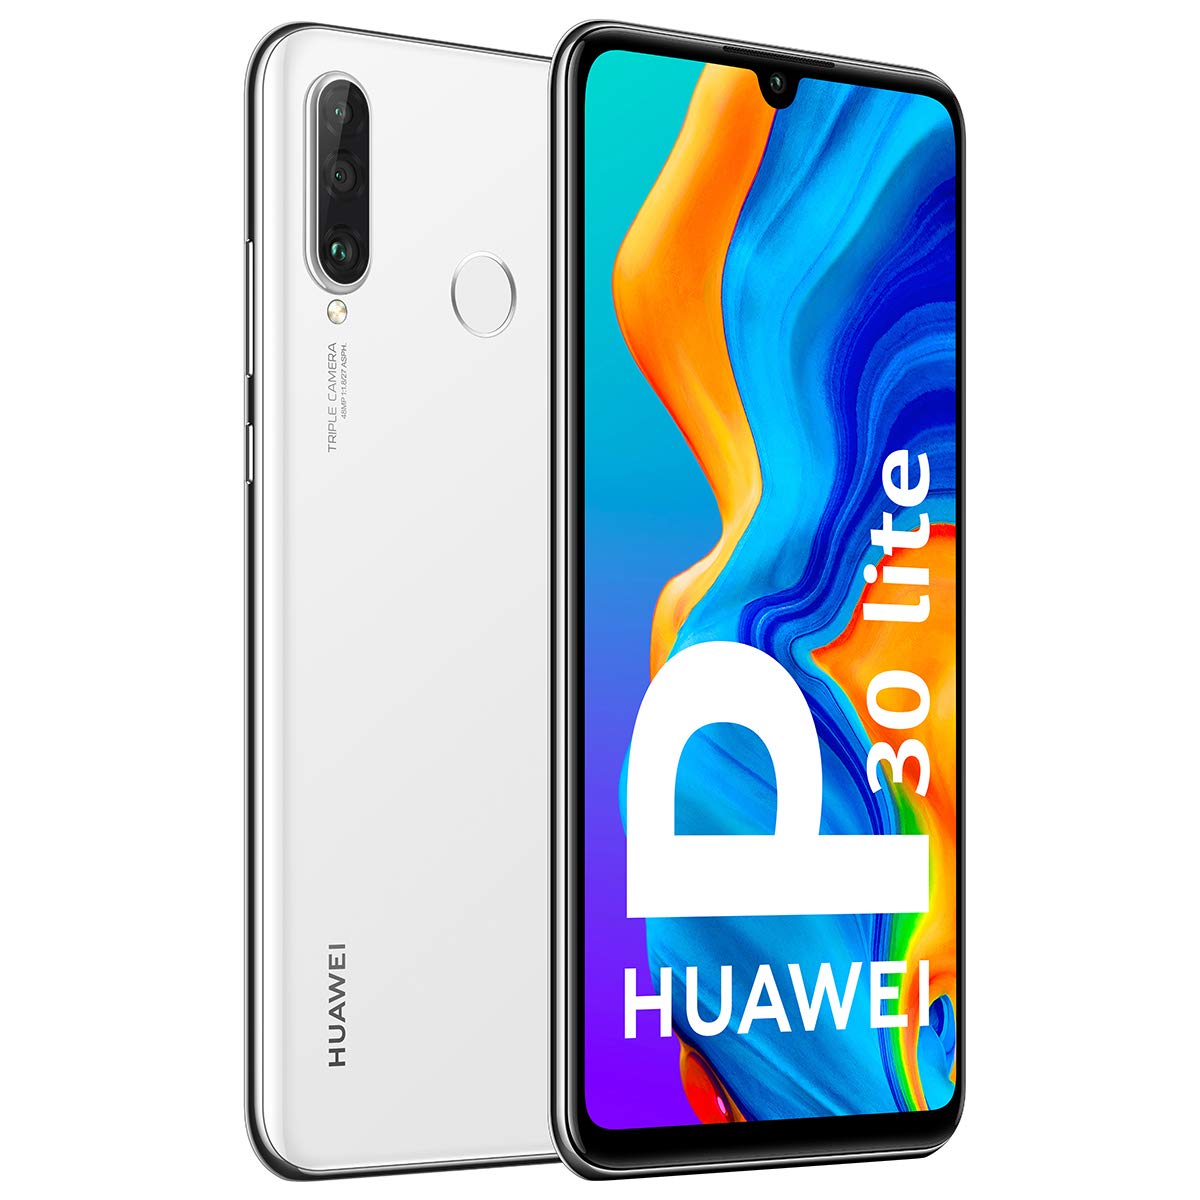 Huawei P20 Lite 32Gb / 3Gb Ram / 16Mp / 3000mAh Android saynama